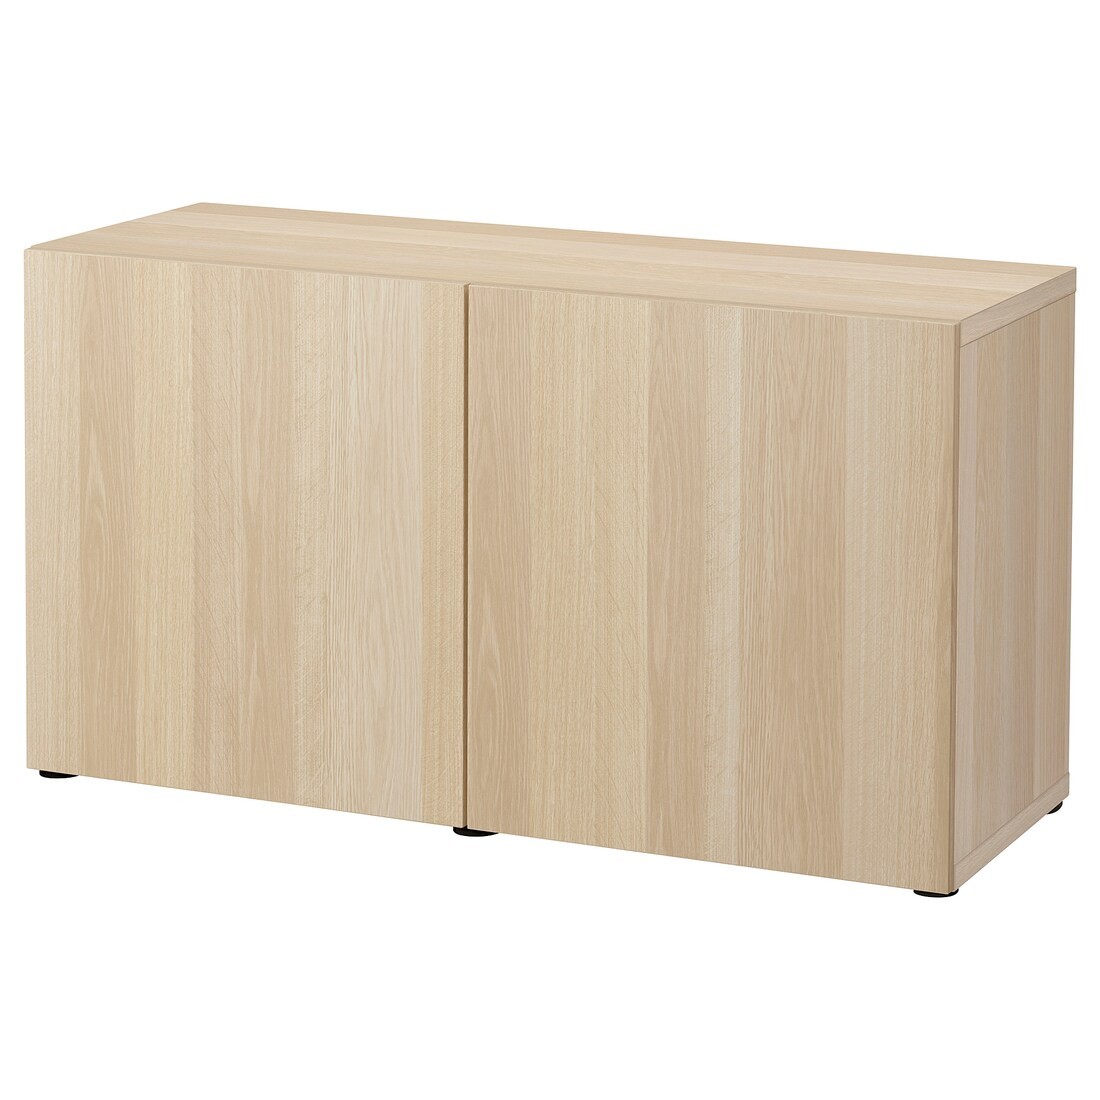 IKEA BESTÅ БЕСТО Комбинация для хранения с дверцами, под беленый дуб / Lappviken под беленый дуб, 120x42x65 см 29324532 293.245.32